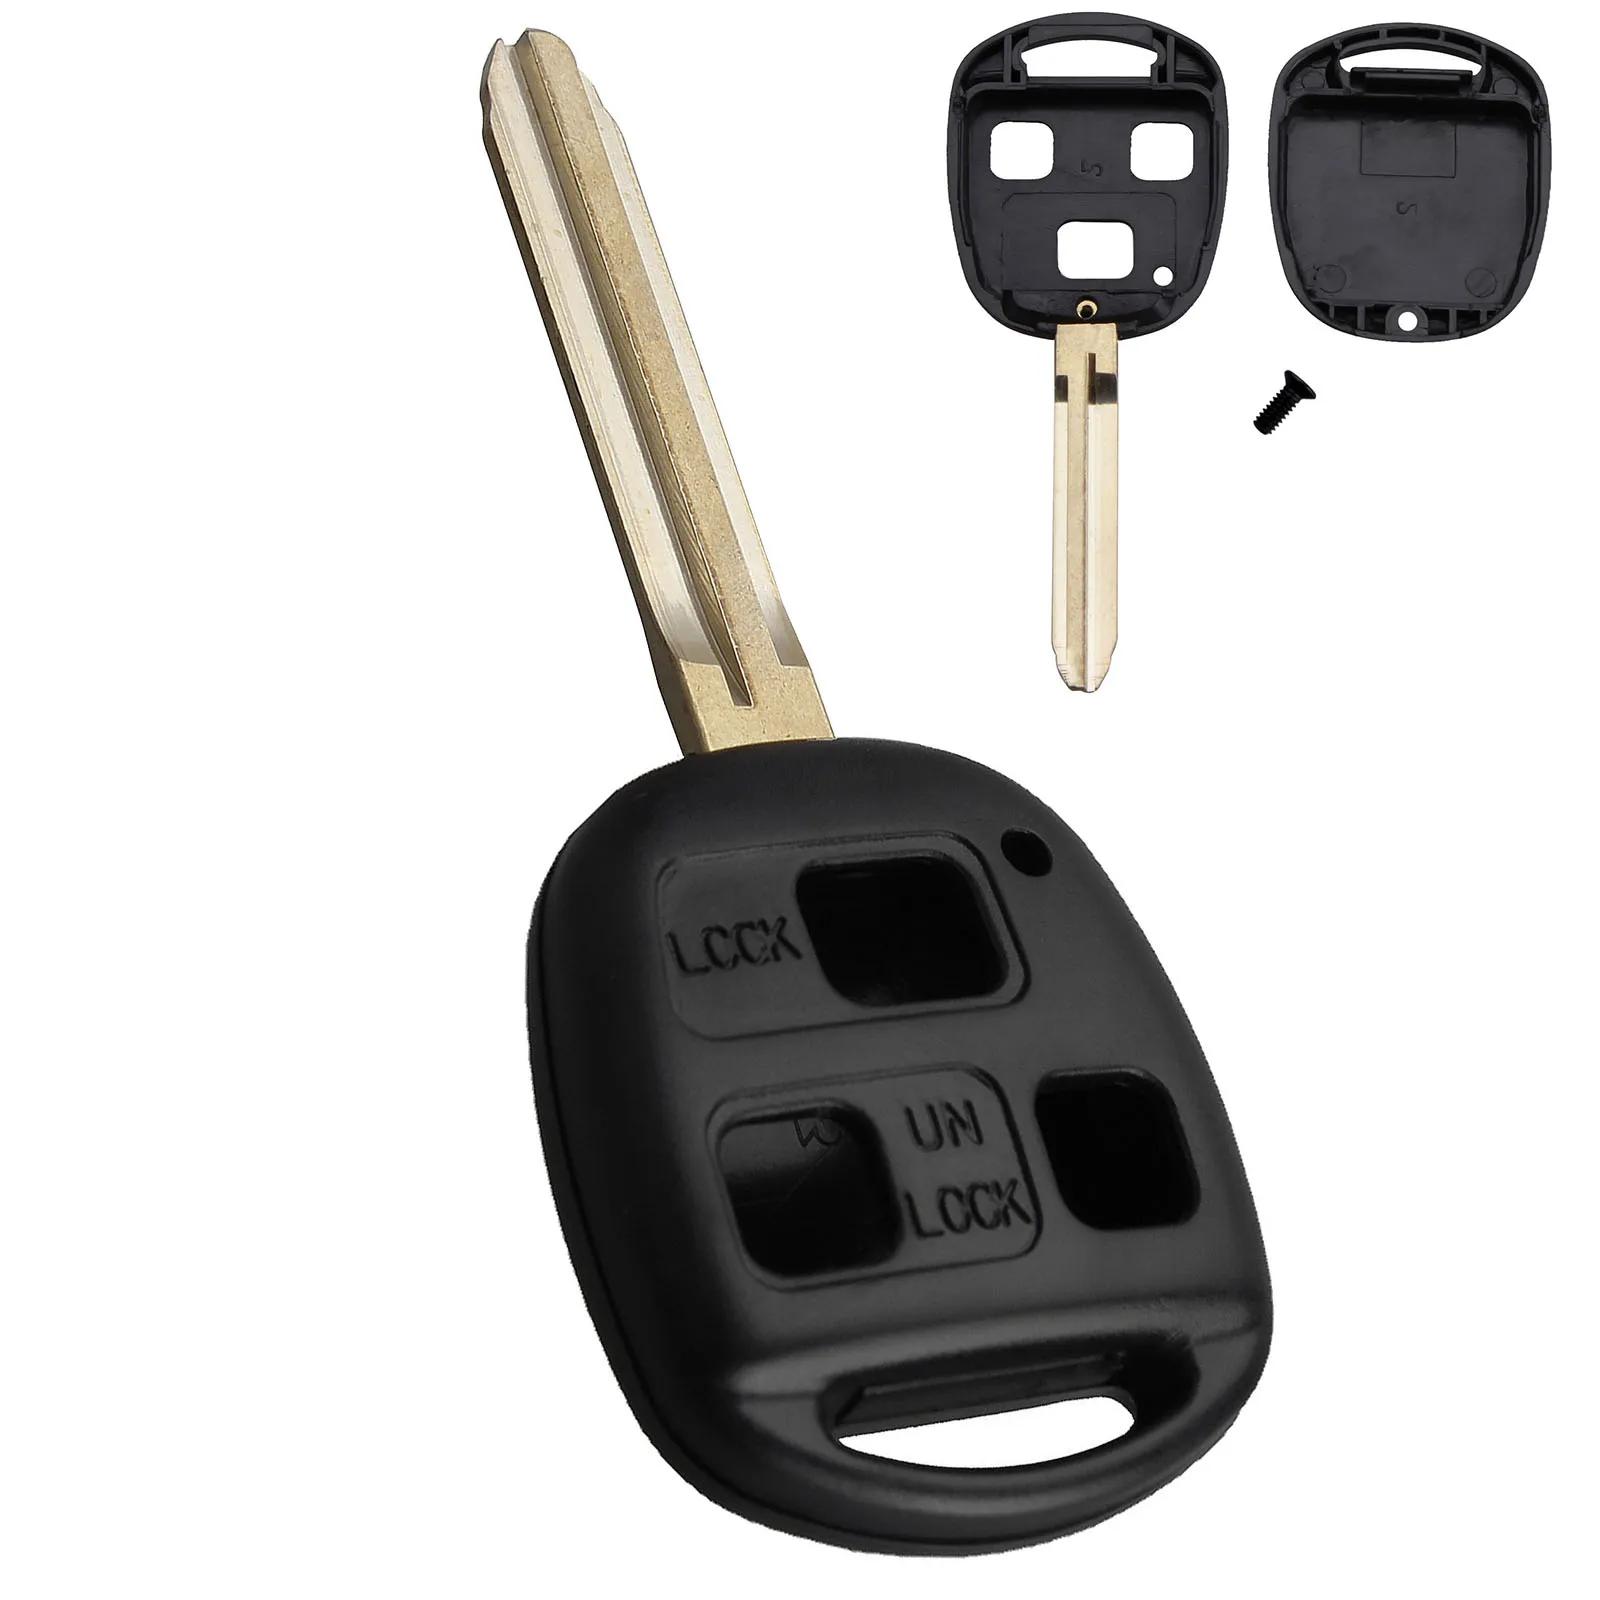 2 Pcs 3 Buttons Remote Key Shell Case FobUncut Blade for Toyota Camry Land Cruiser FJ Cruiser 45 X 37mm Black Replac